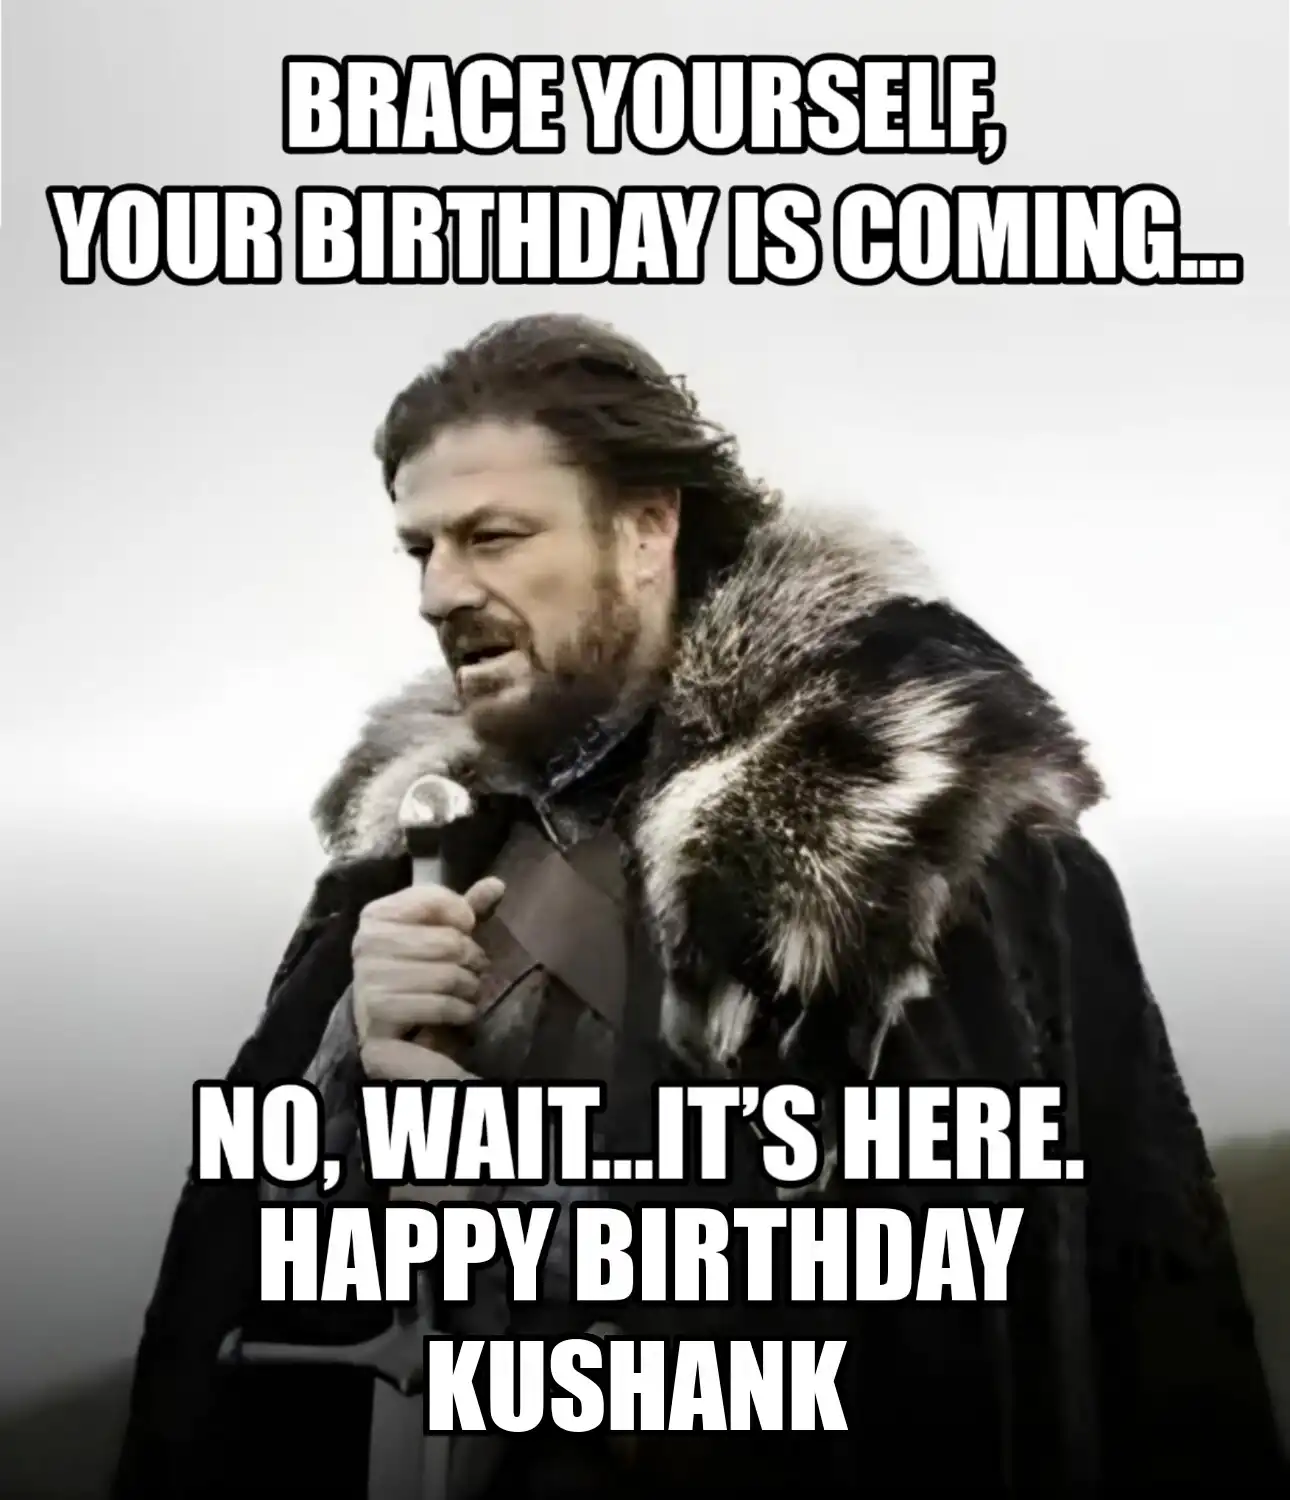 Happy Birthday Kushank Brace Yourself Your Birthday Is Coming Meme